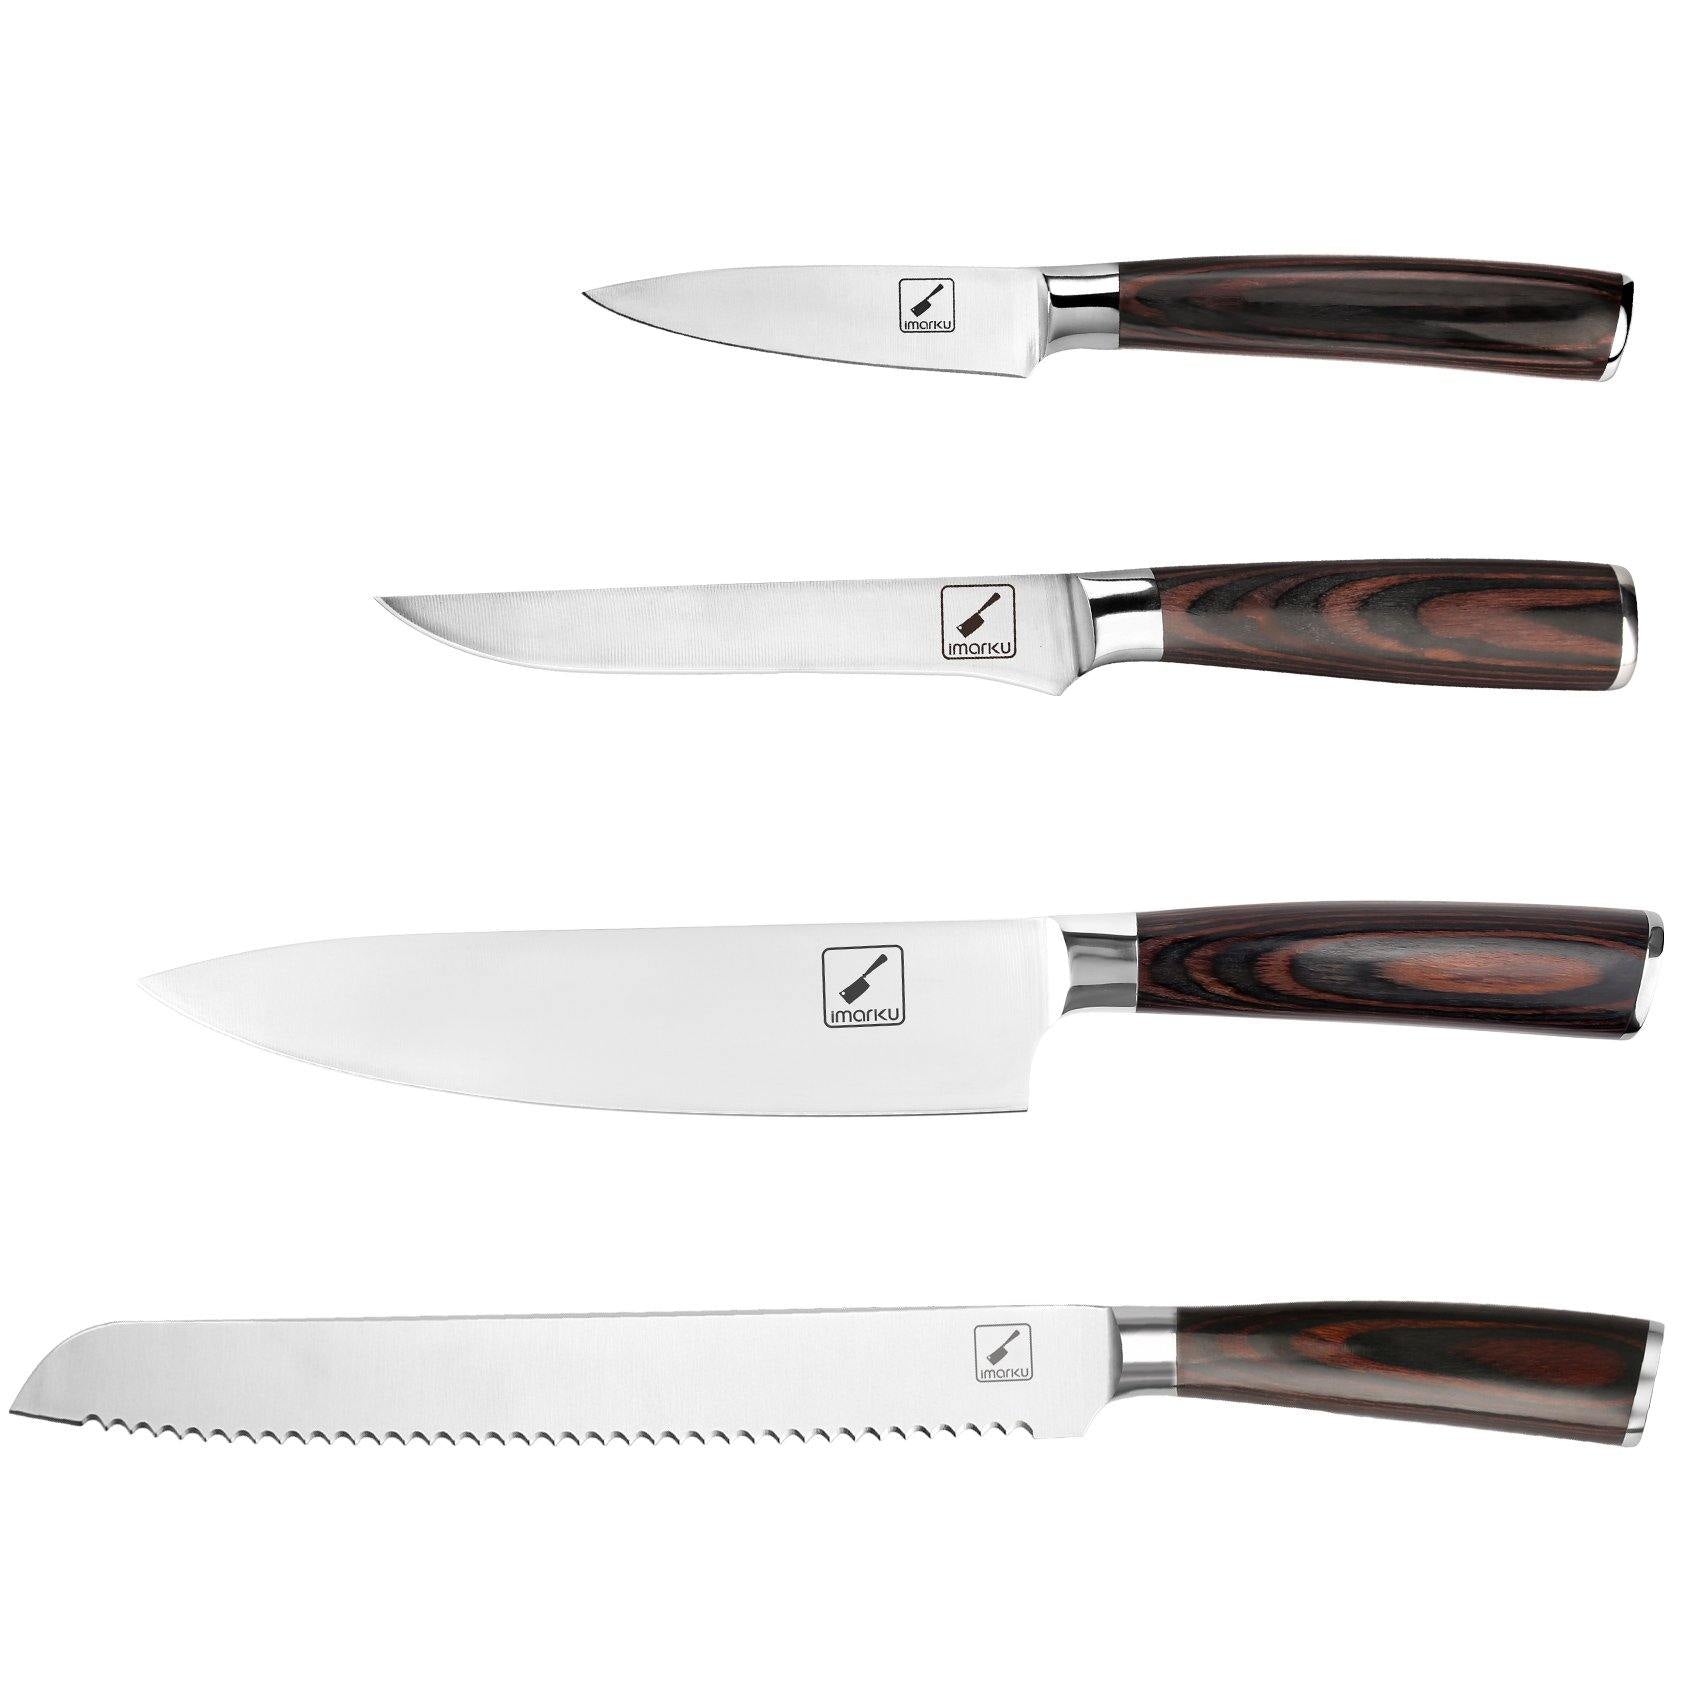  FineTool Kitchen Knife Sets, Professional Chef Knives